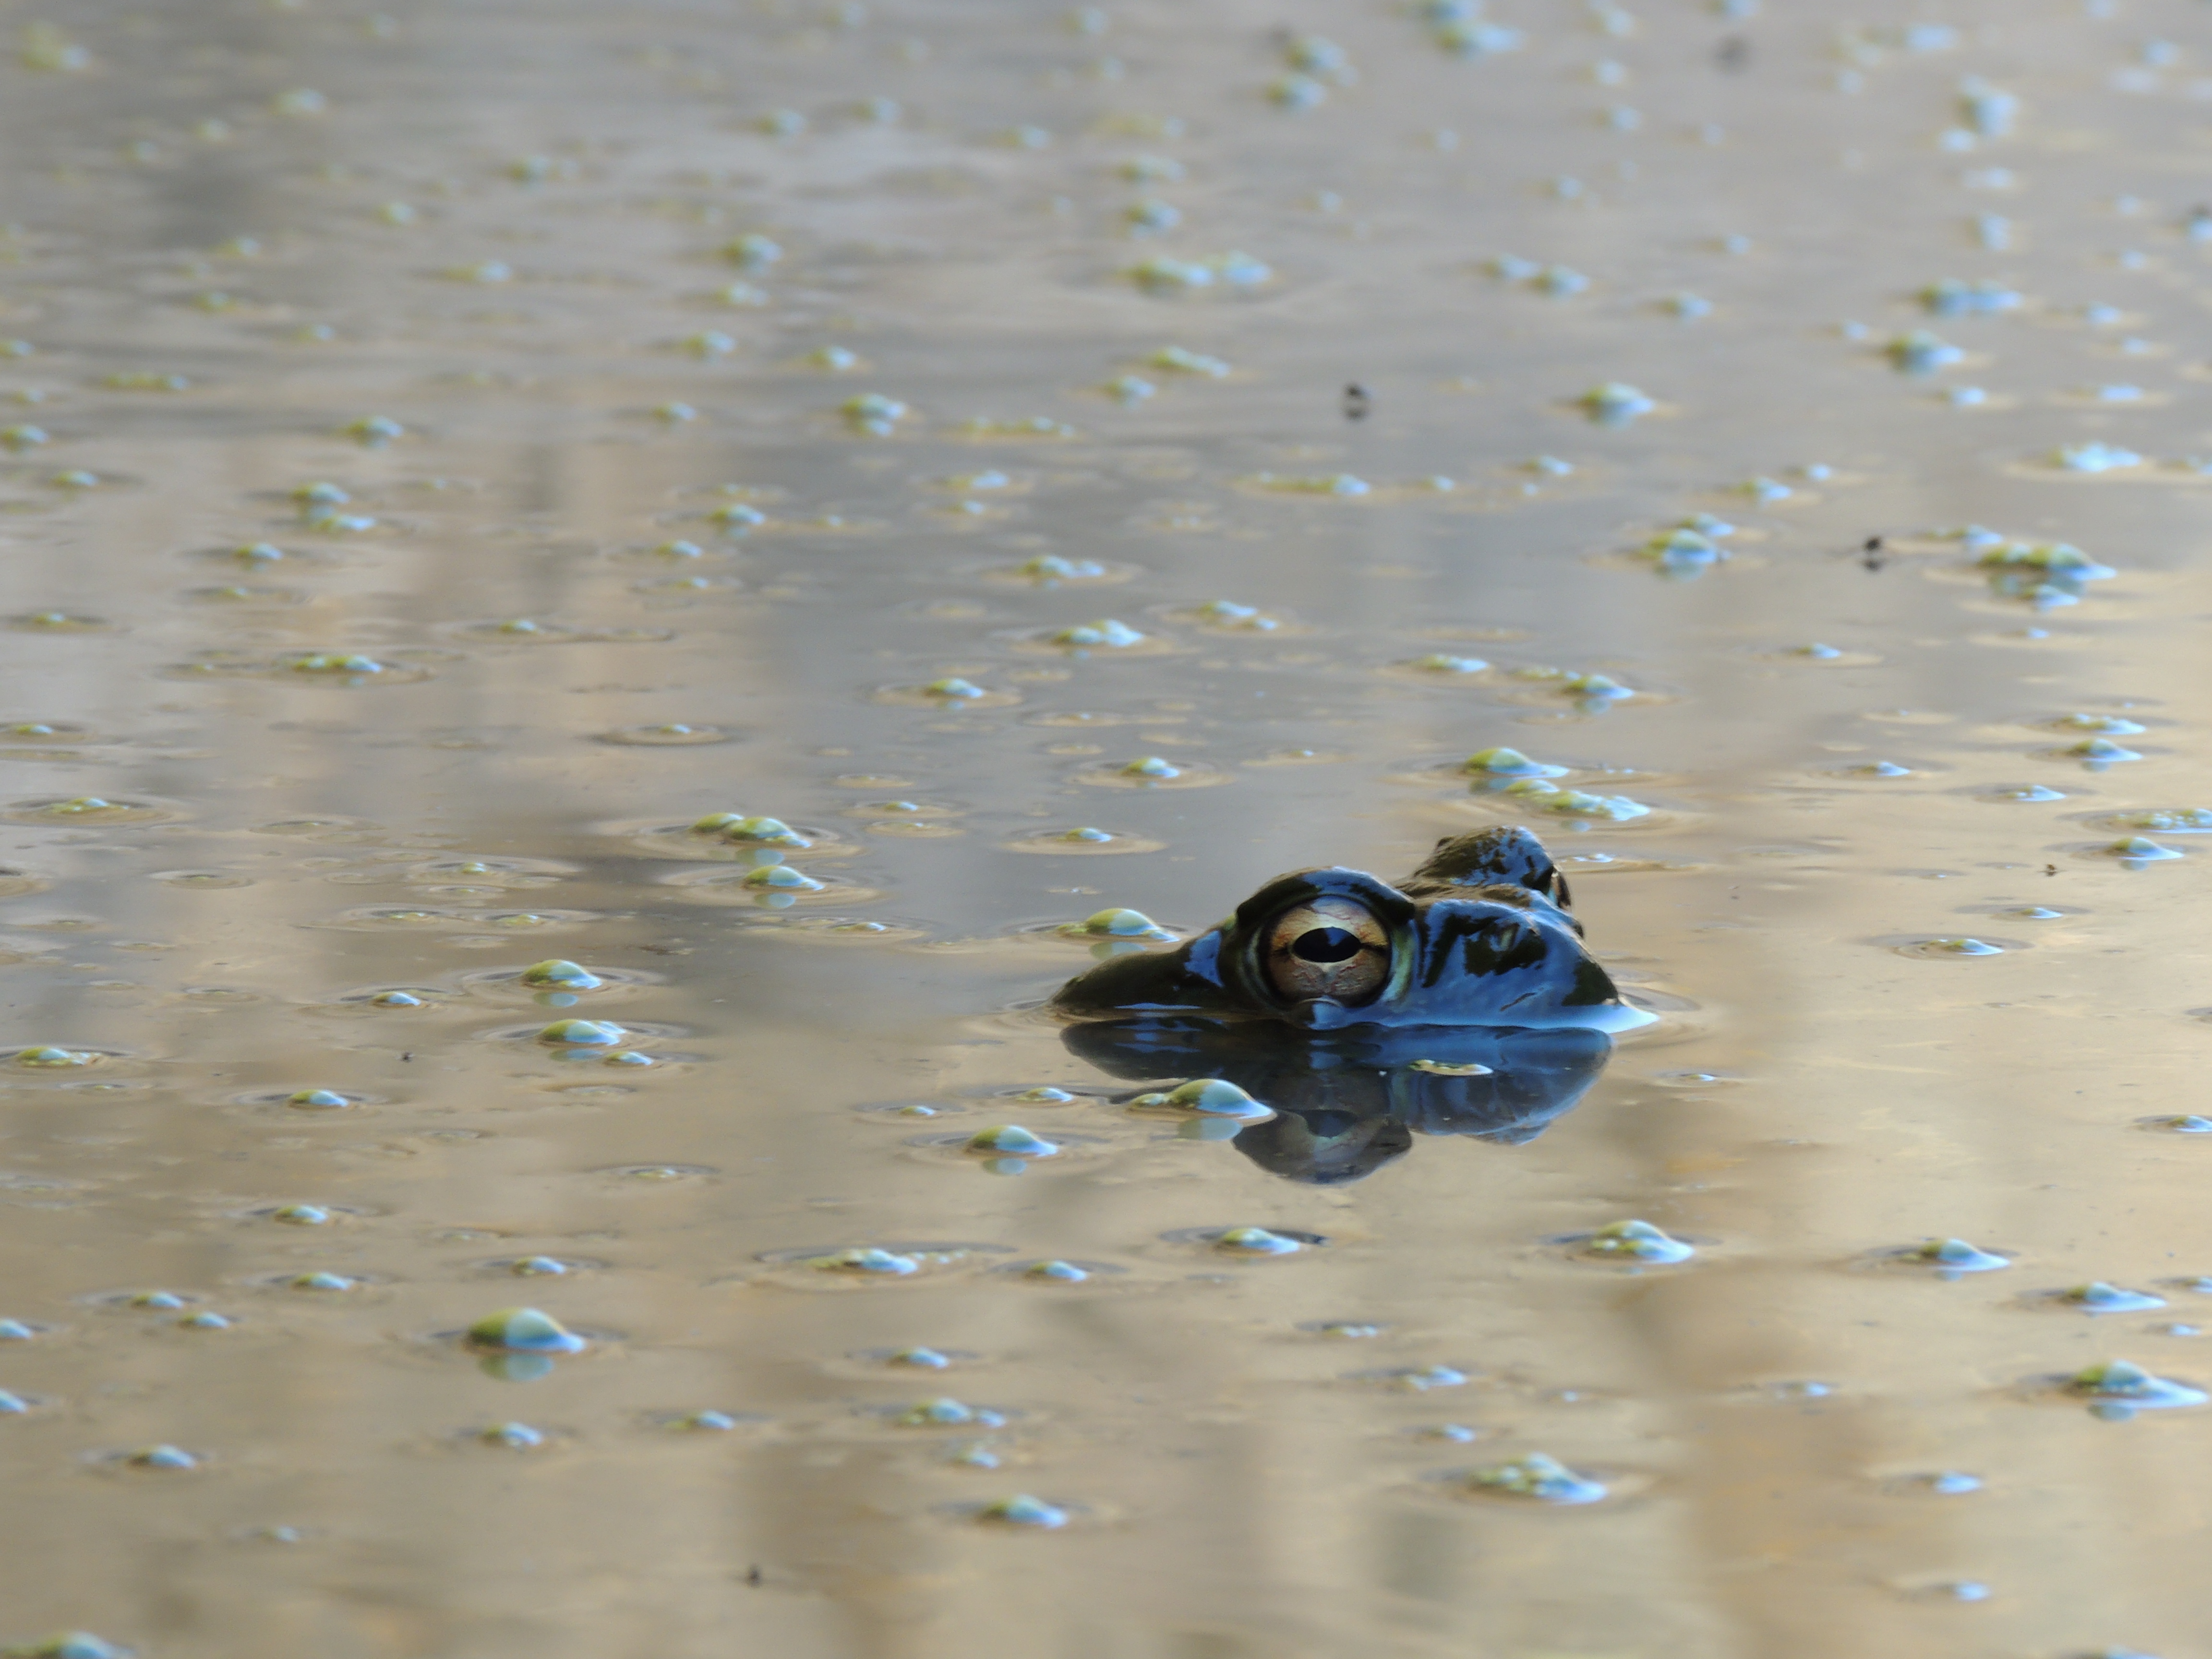 Sonoran Desert Toad in water